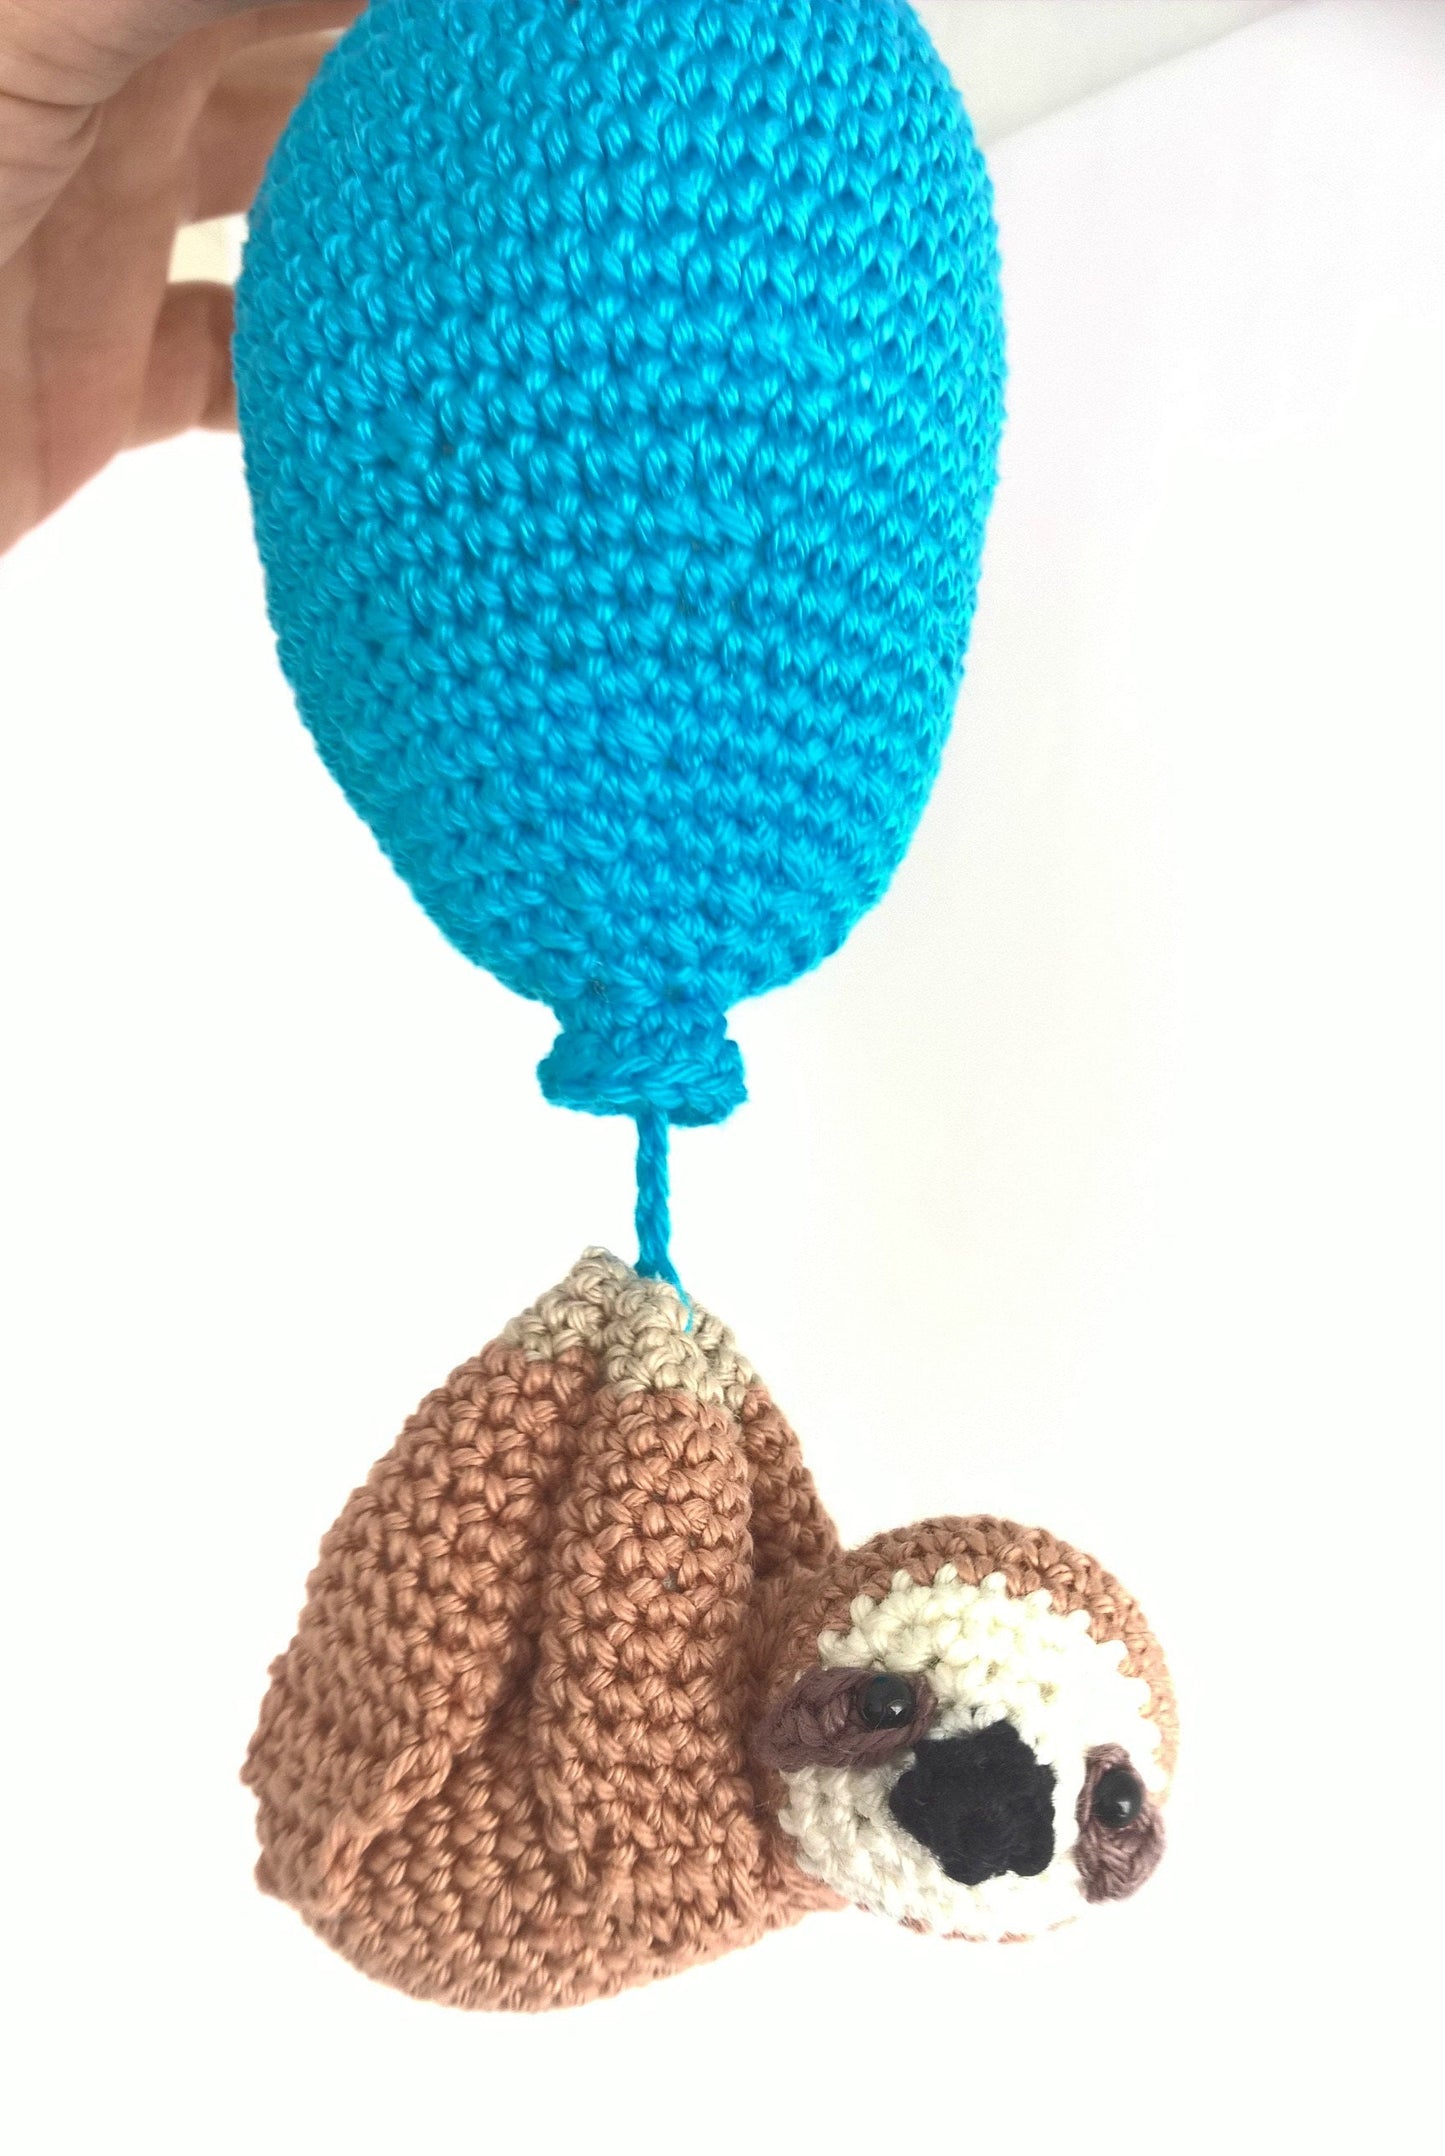 Crochet sloth with balloon